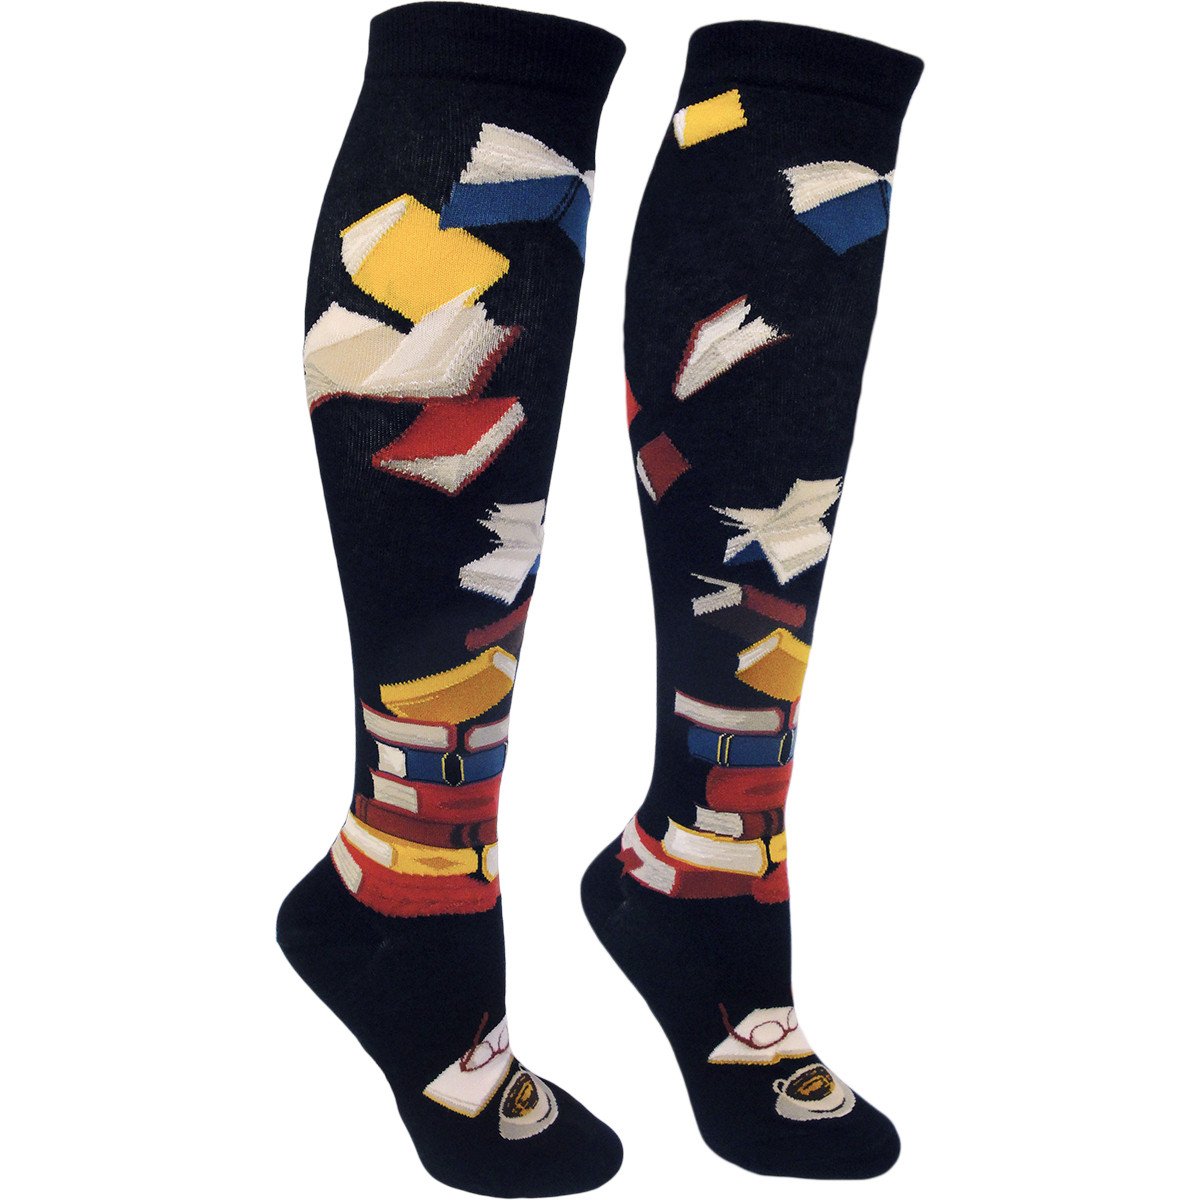 Quality Crew & Knee High Socks with Fun Designs - ModSocks